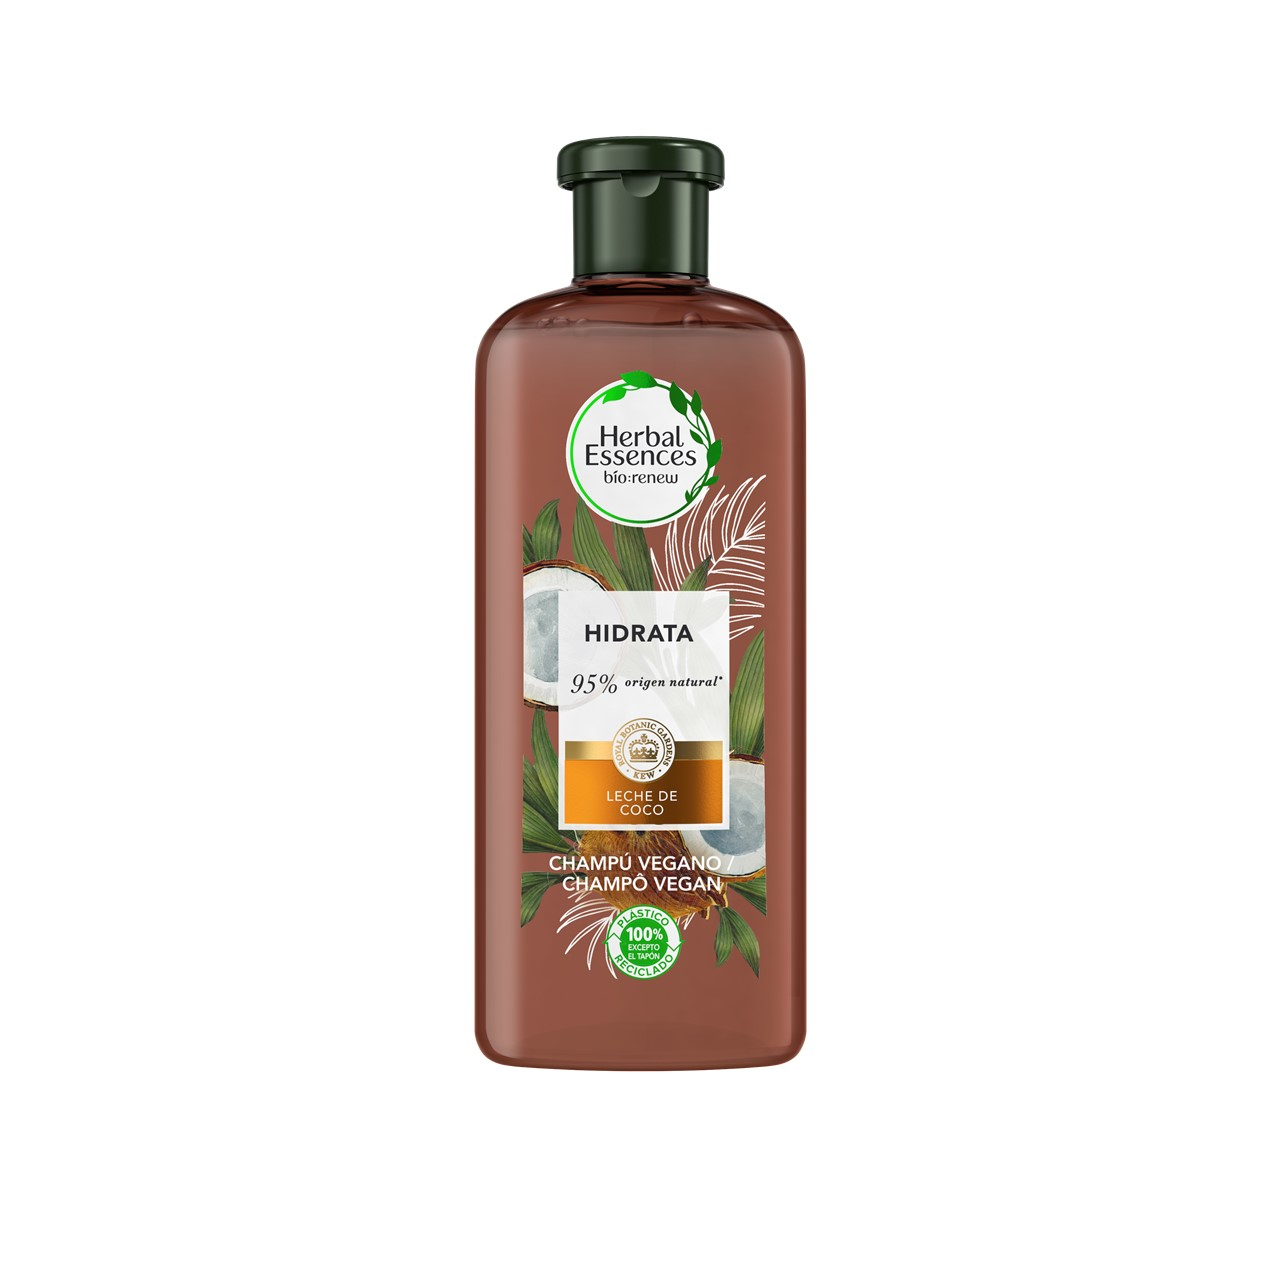 https://static.beautytocare.com/media/catalog/product/h/e/herbal-essences-bio-renew-coconut-milk-shampoo-400ml_1.jpg